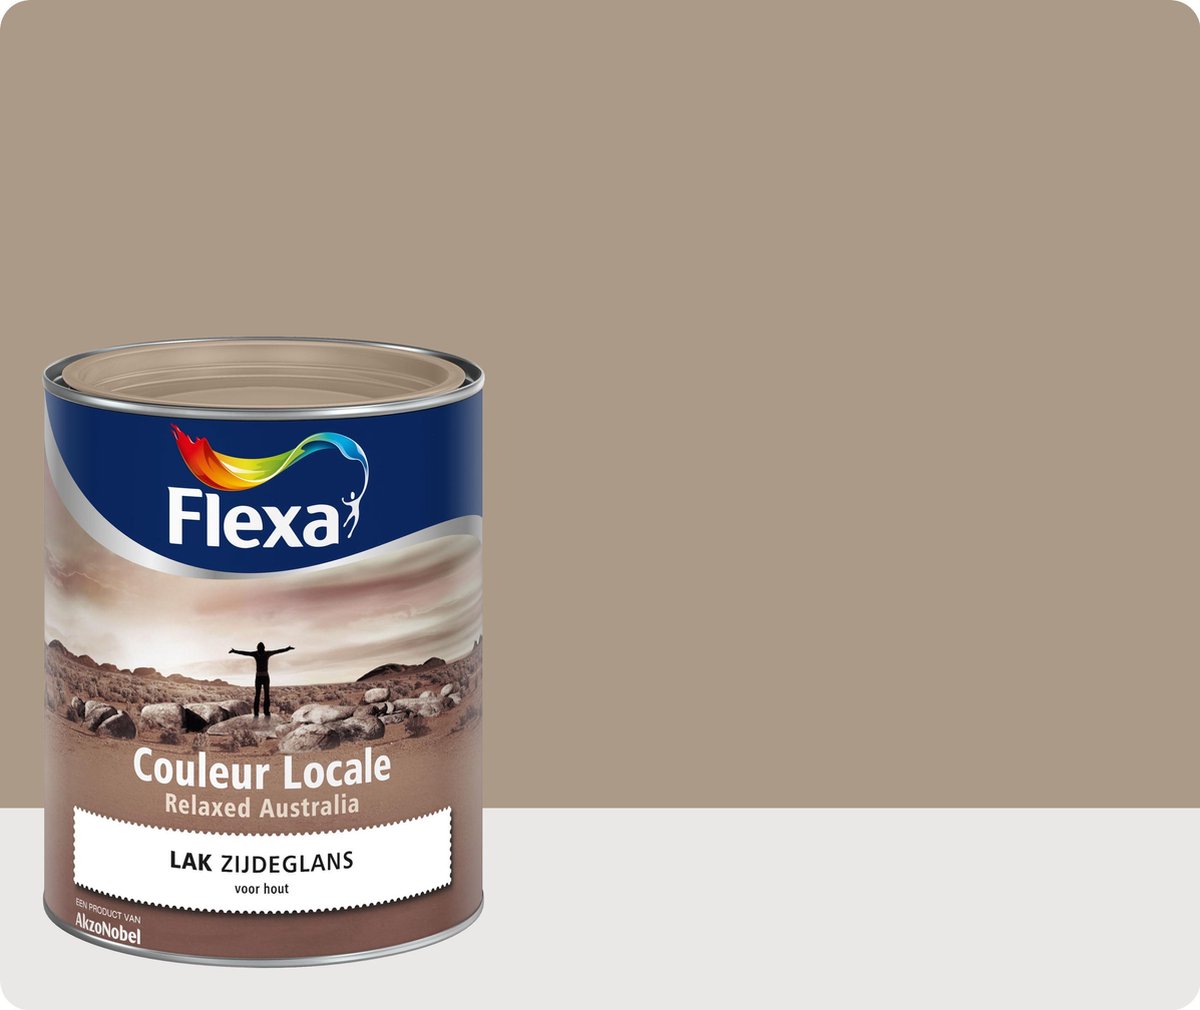 Flexa Couleur Locale - Lak Zijdeglans - Relaxed Australia Desert - 6515 - 0,75 liter